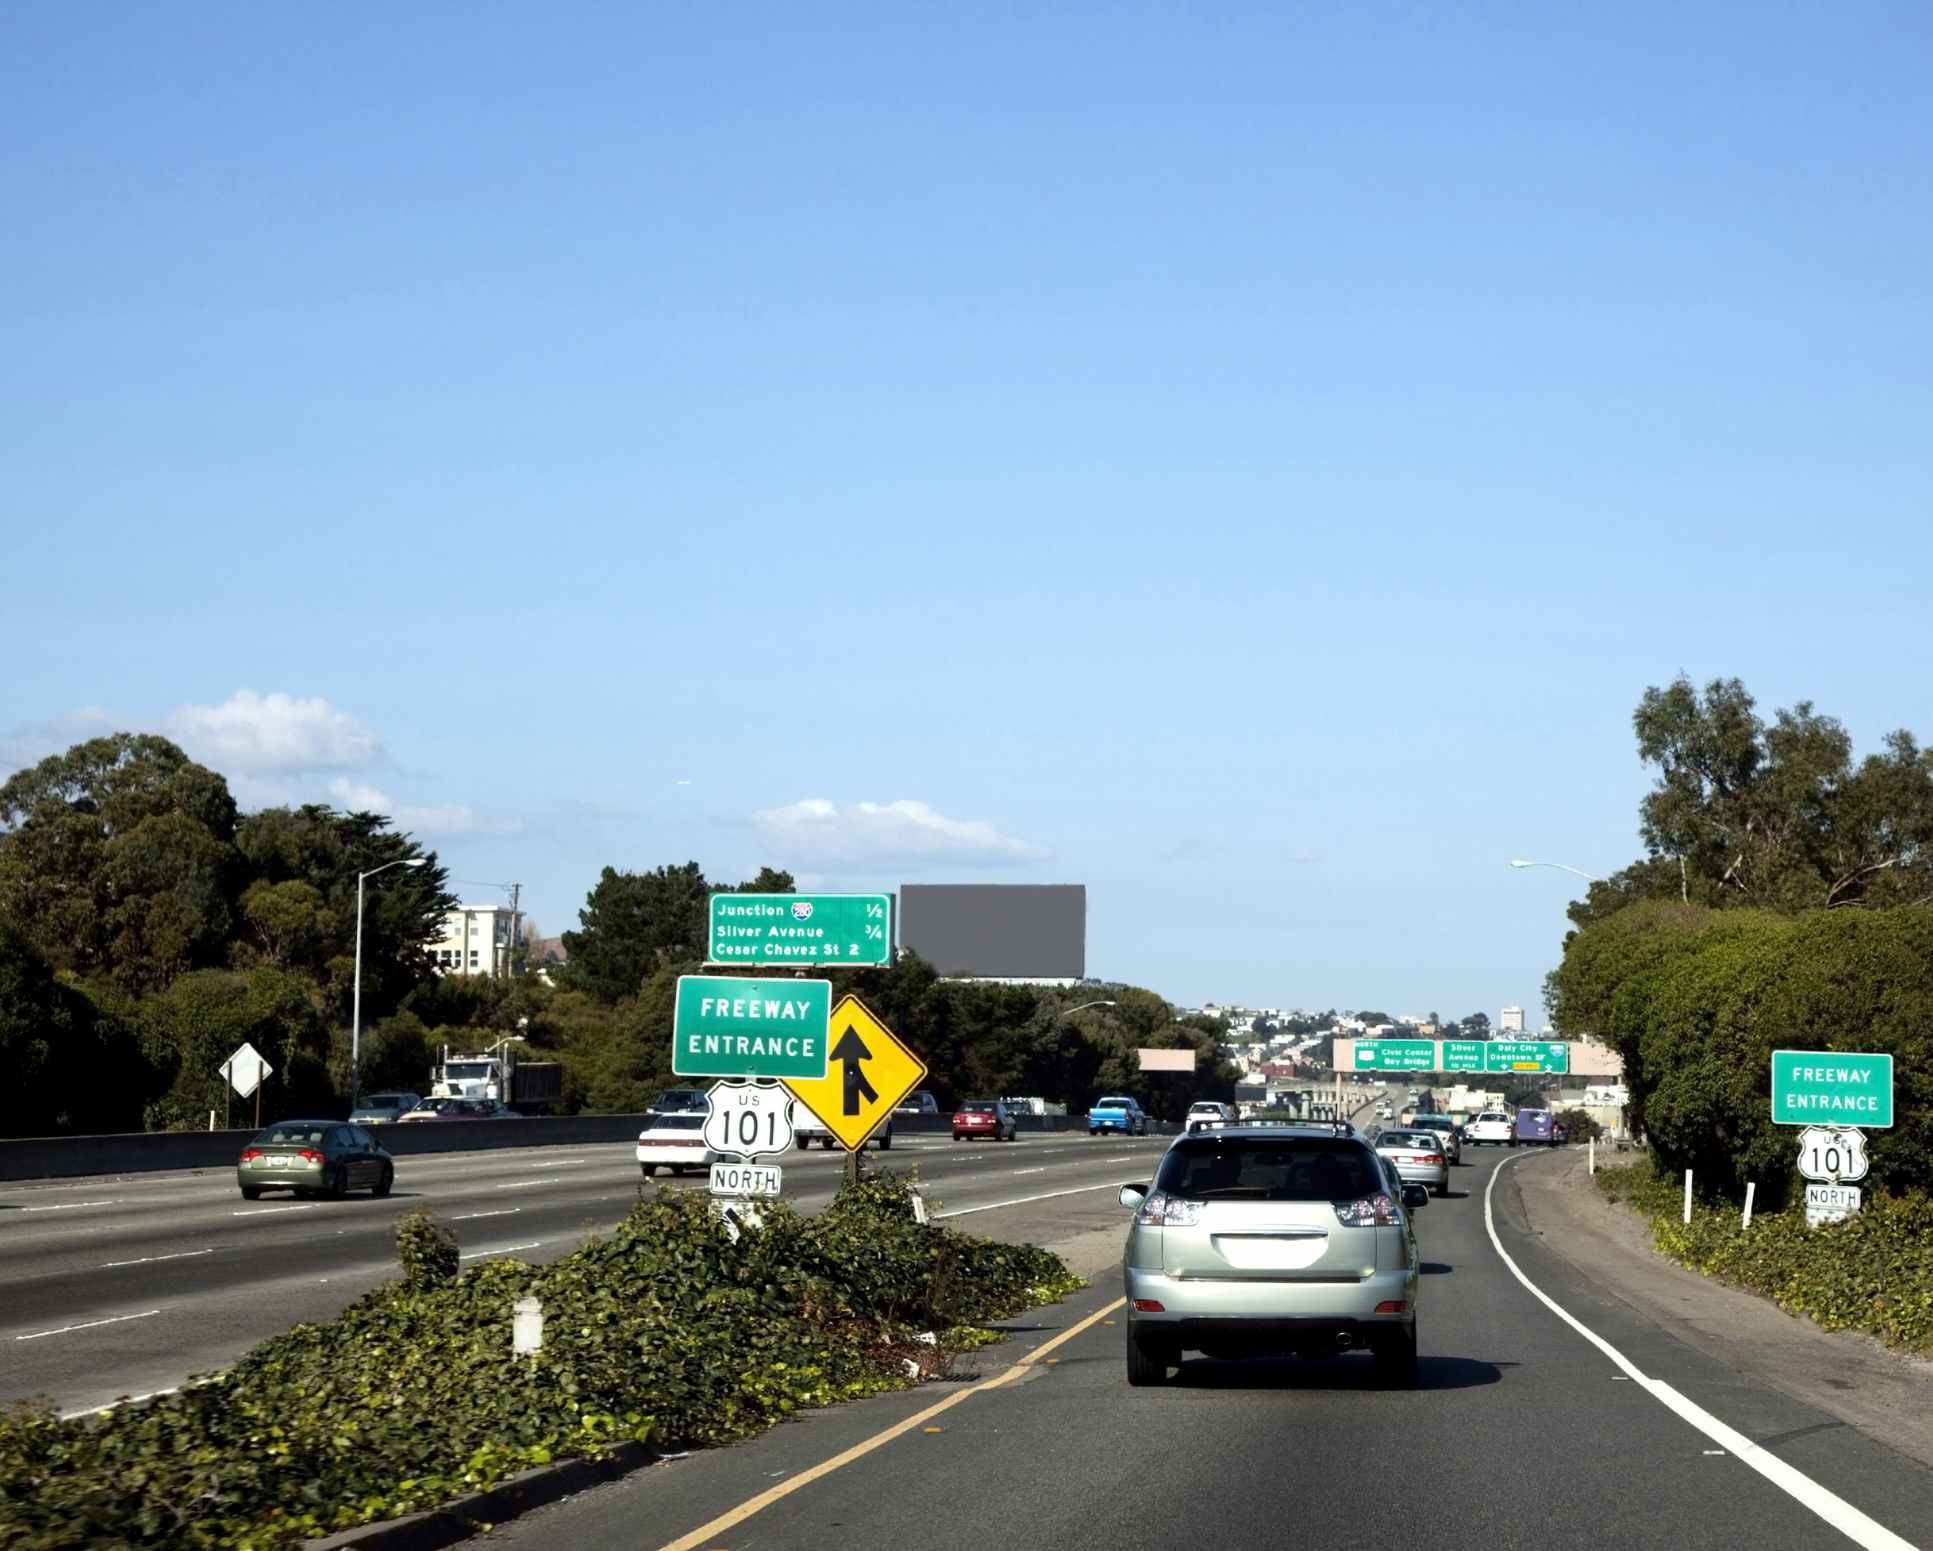 Car merging onto freeway traffic in California.